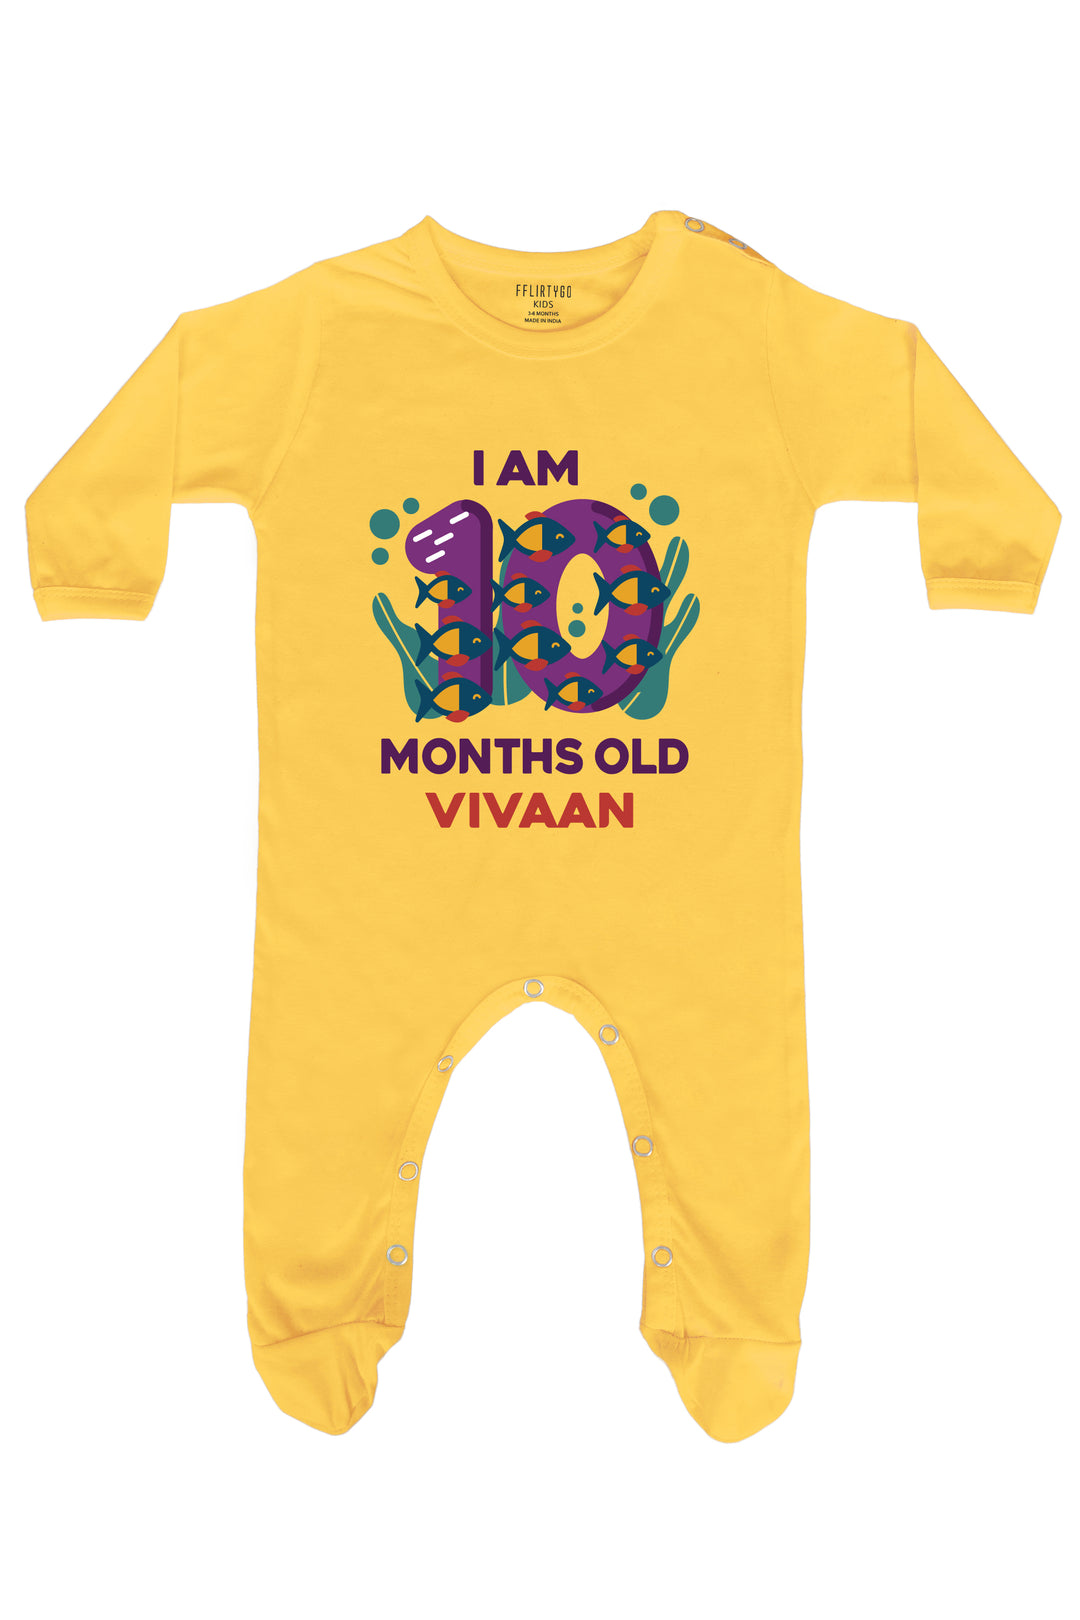 Ten Month Birthday Baby Romper | Onesies w/ Custom Name